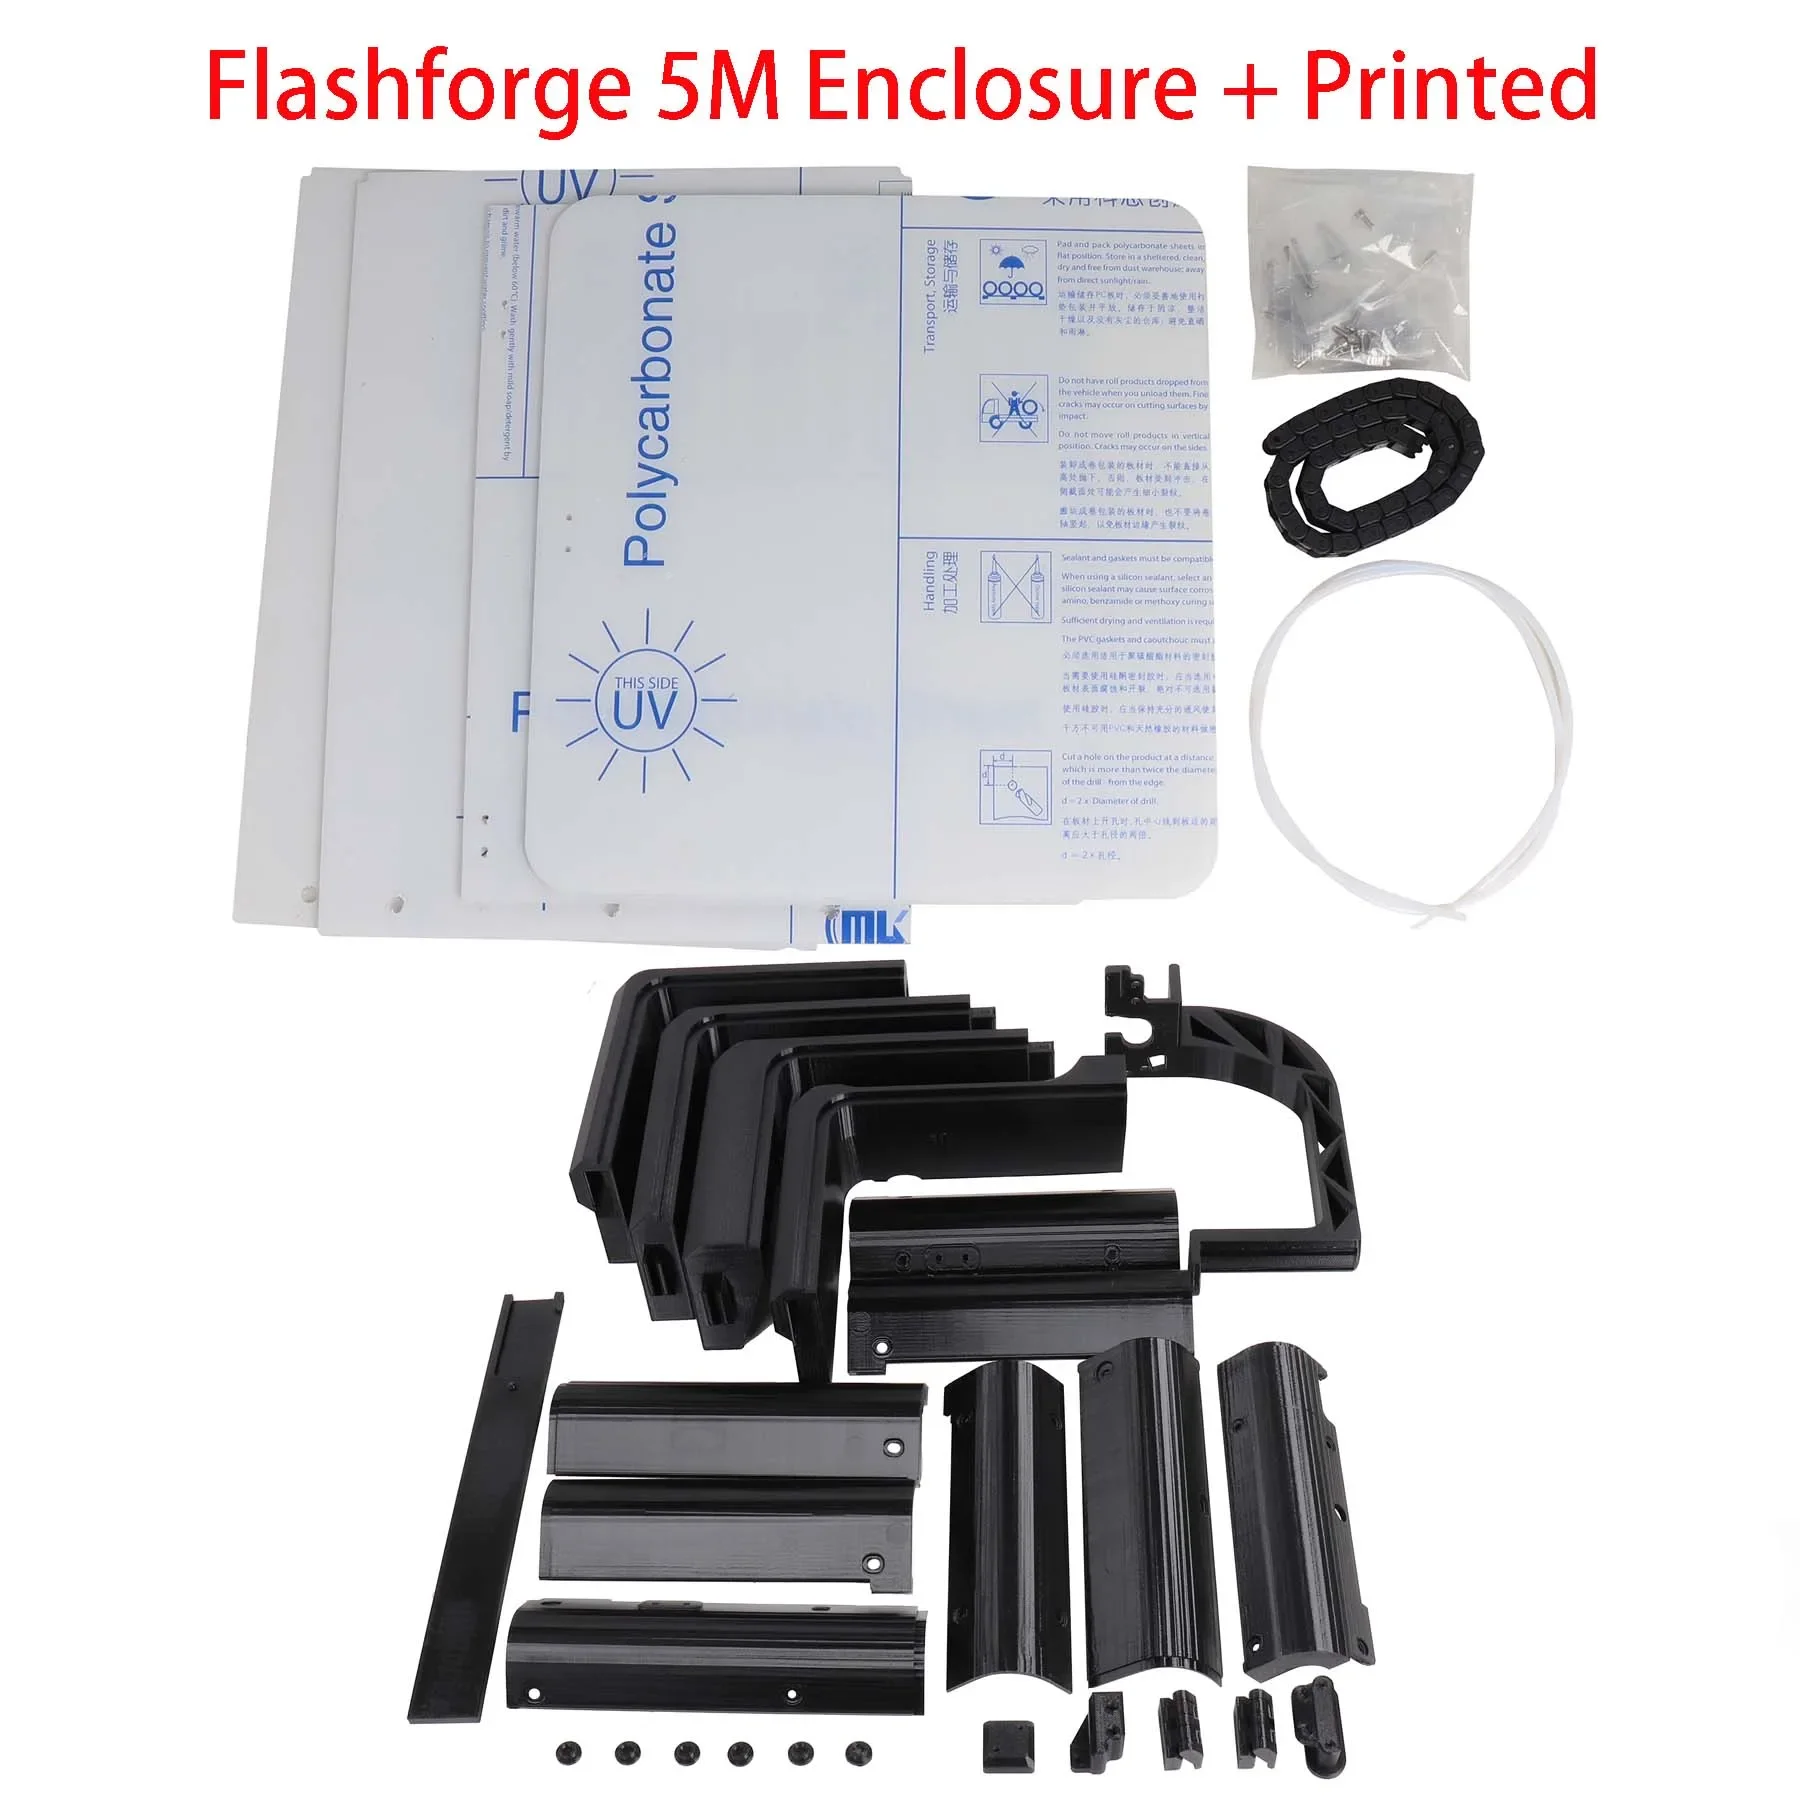 flashforge-adventurer-5m-ad5m-3d-printer-diy-enclosure-panel-kit-with-printed-parts-clear-polycarbonate-pc-sheet-3mm